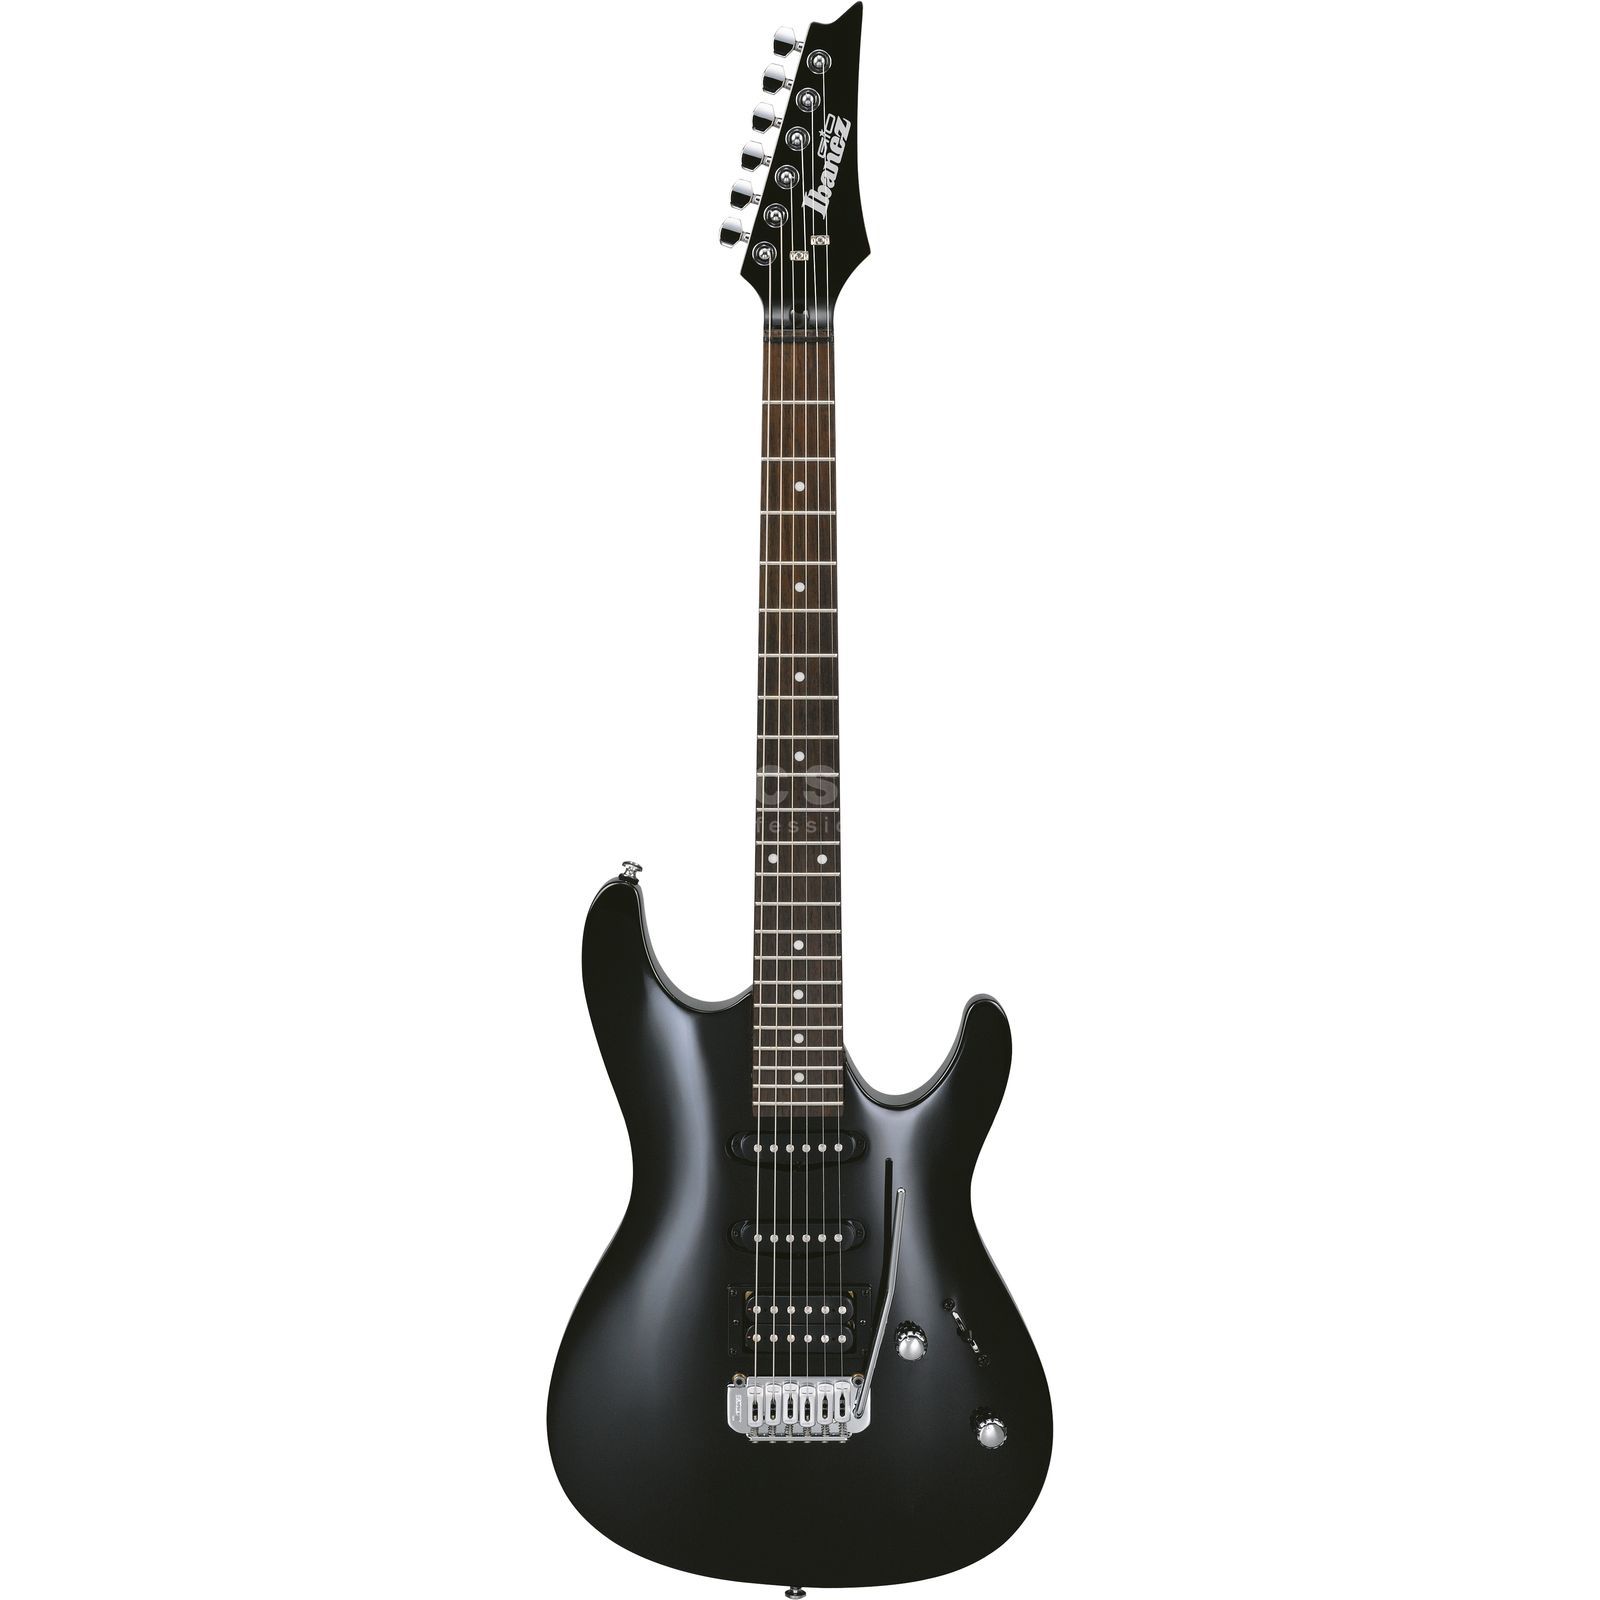 Ibanez GSA60 Electric Guitar, Black N ight